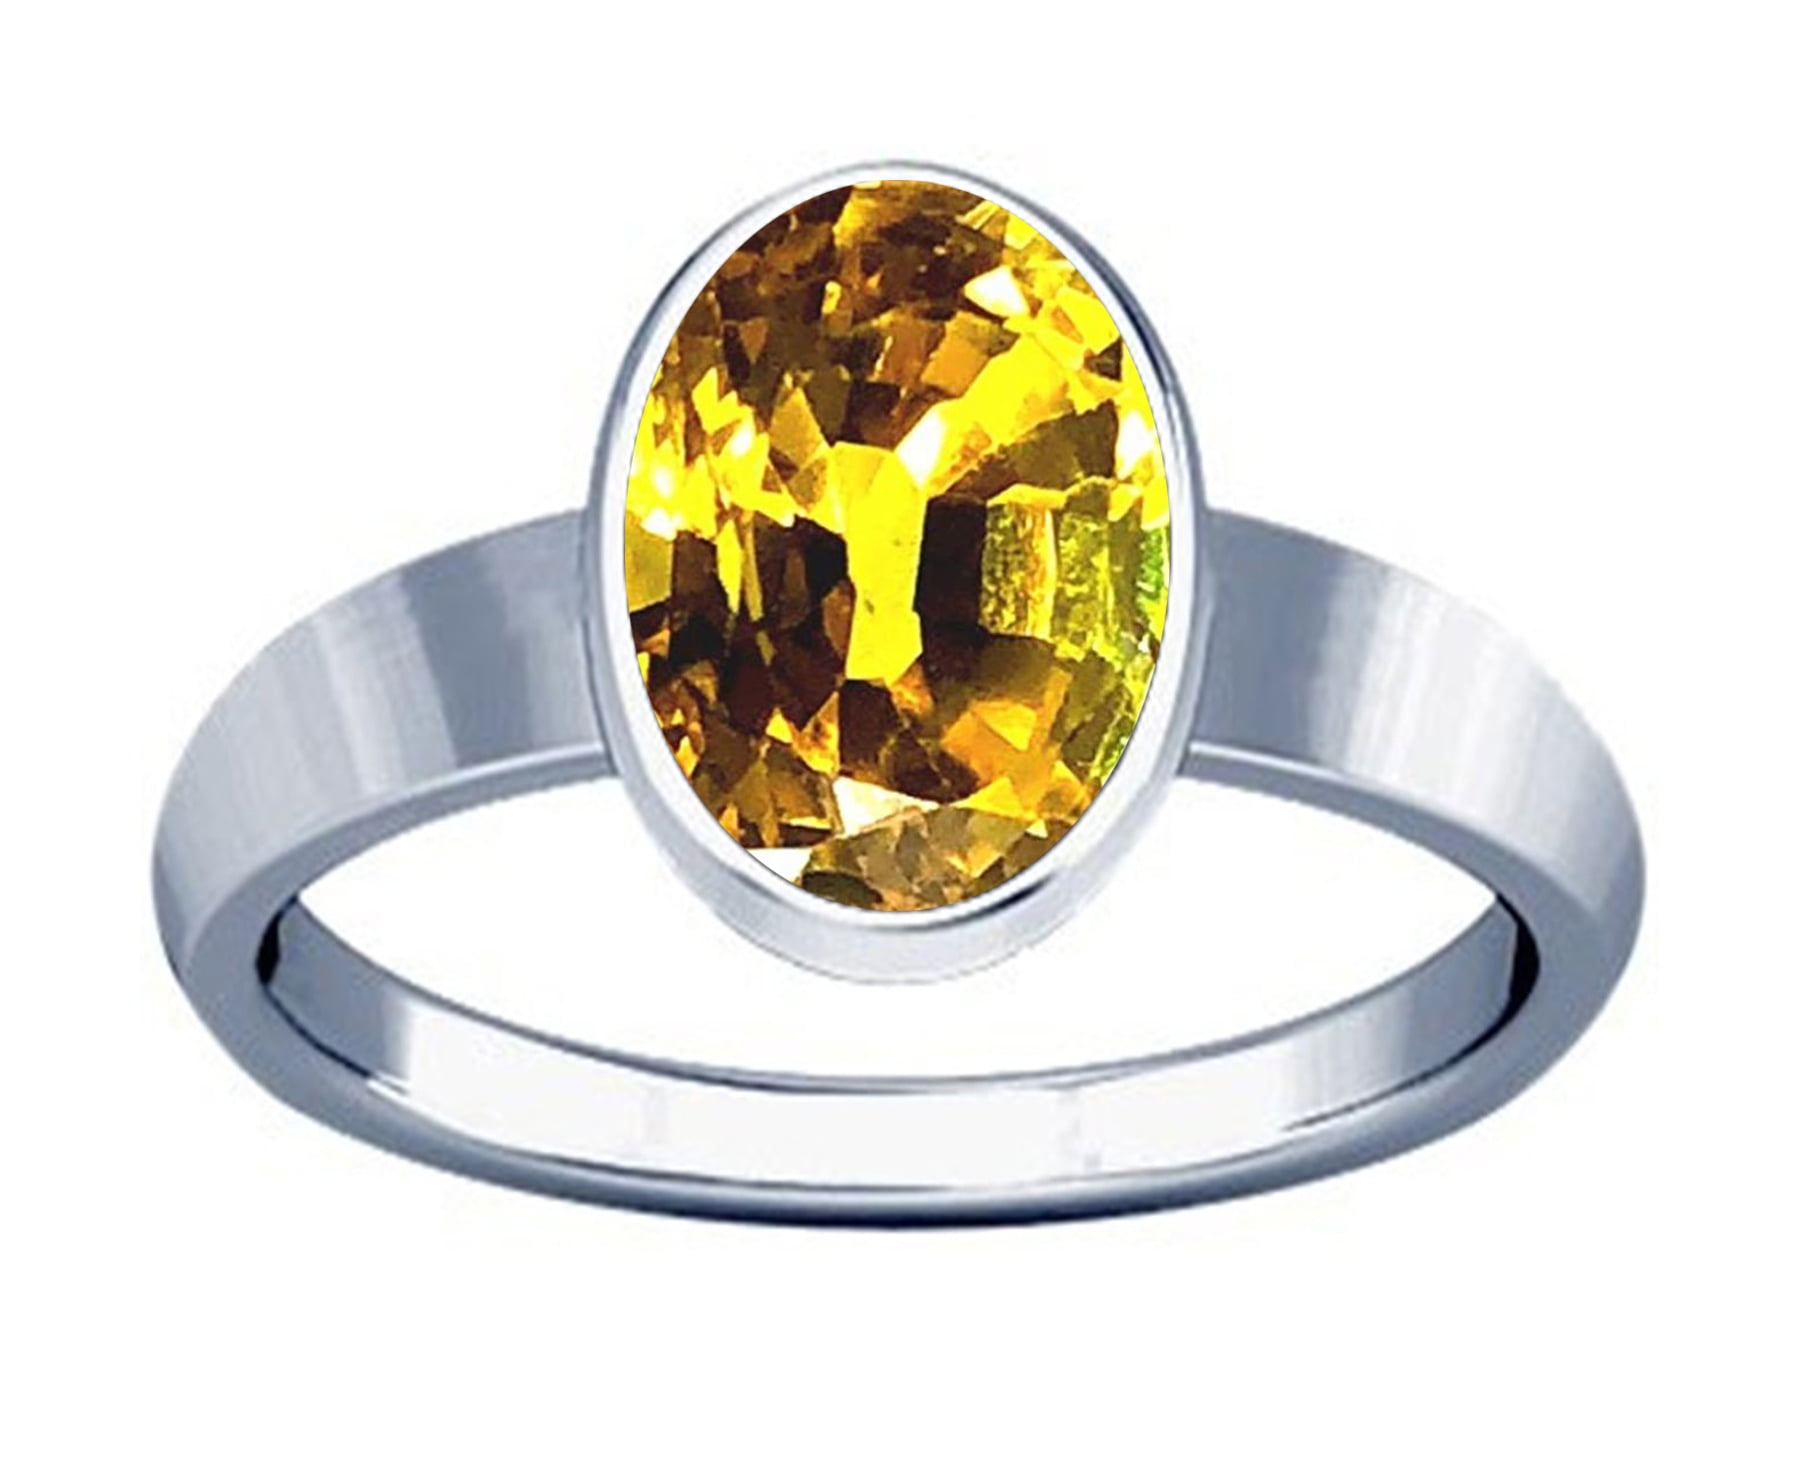 Senroar Stylish and Latest Original Yellow Sapphire Pukhraj Ring 5-7 Carat  7 Ratti Crystal Sapphire Ring Price in India - Buy Senroar Stylish and  Latest Original Yellow Sapphire Pukhraj Ring 5-7 Carat